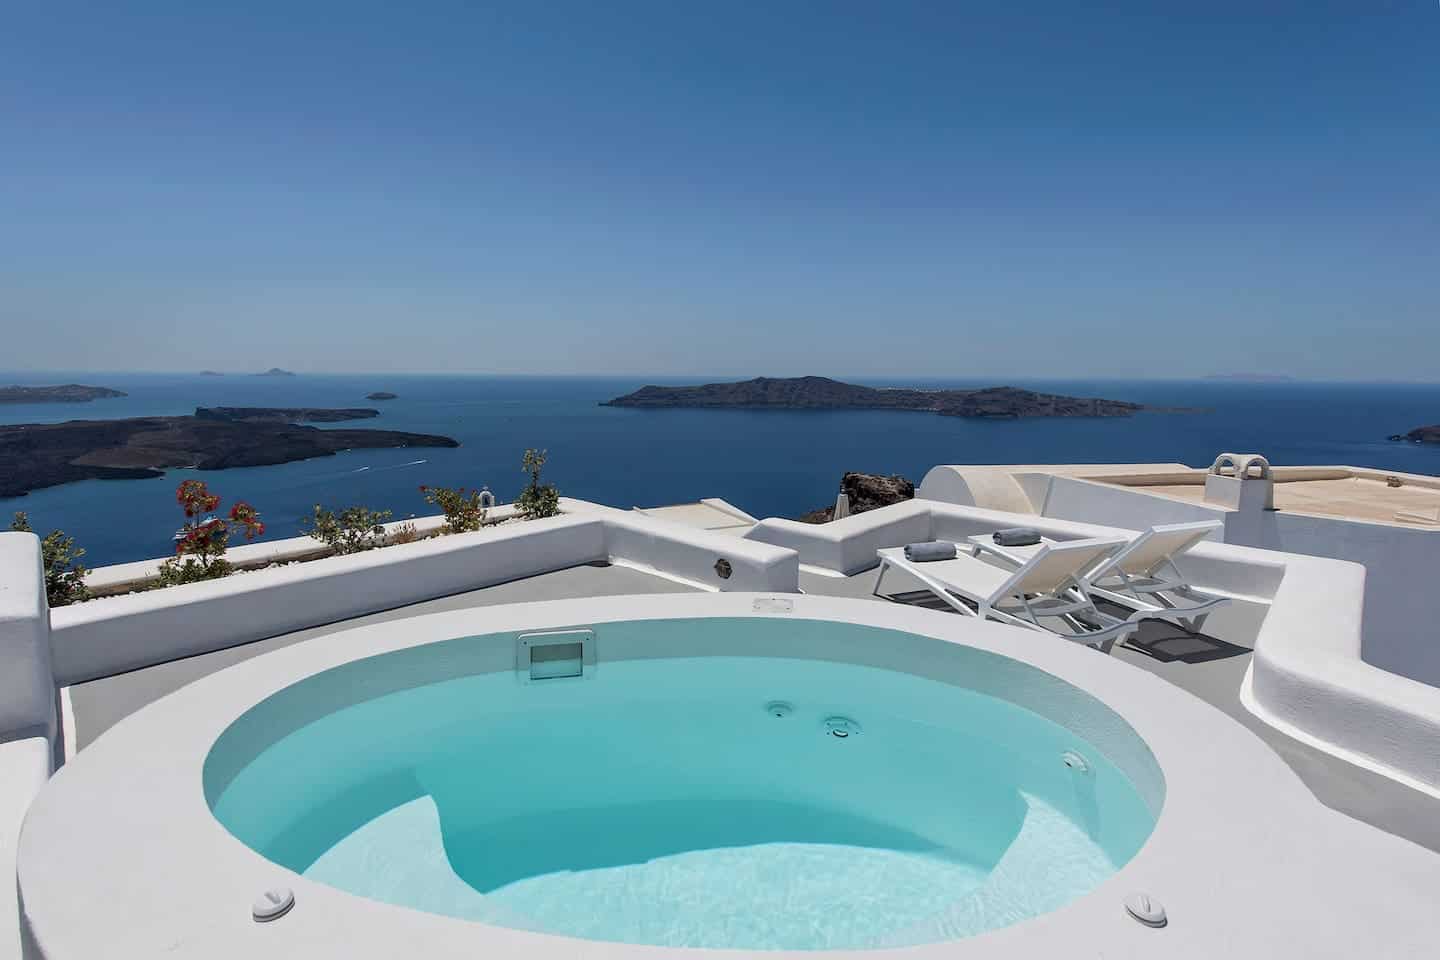 Image of Airbnb rental in Santorini, Greece